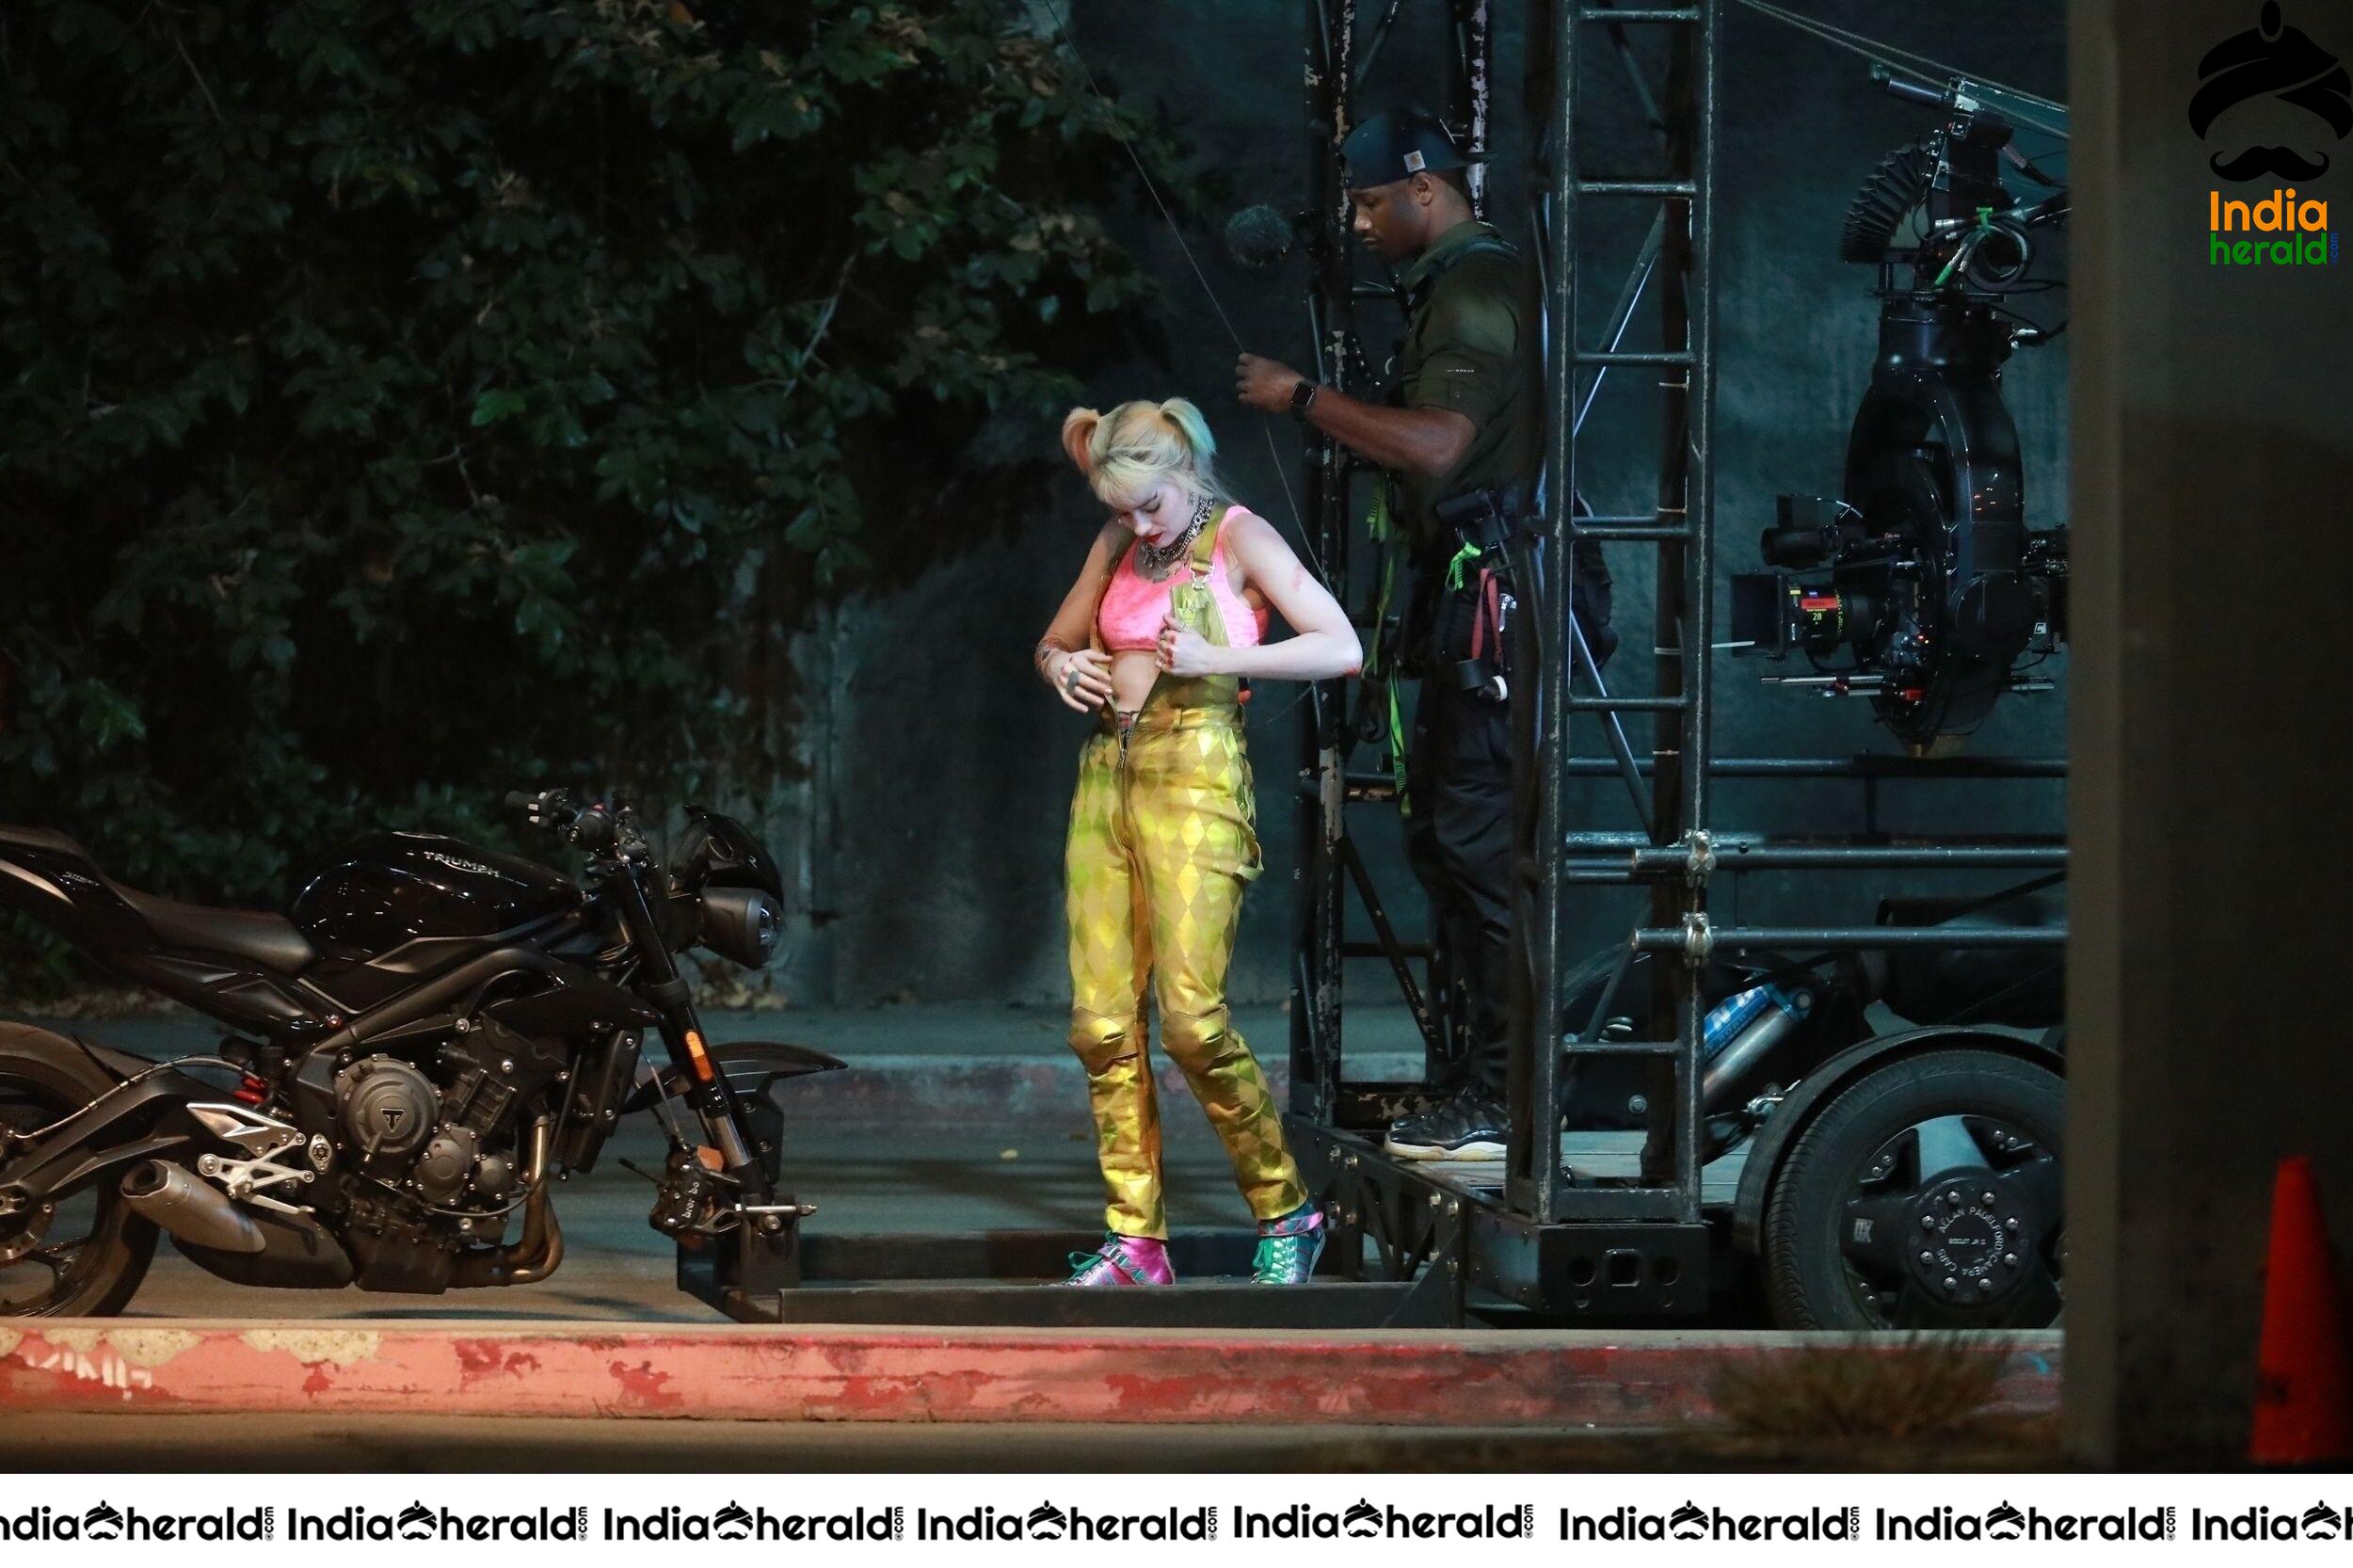 India Herald Exclusive Margot Robbie On The Sets Of Birds Of Prey At LA Set 2